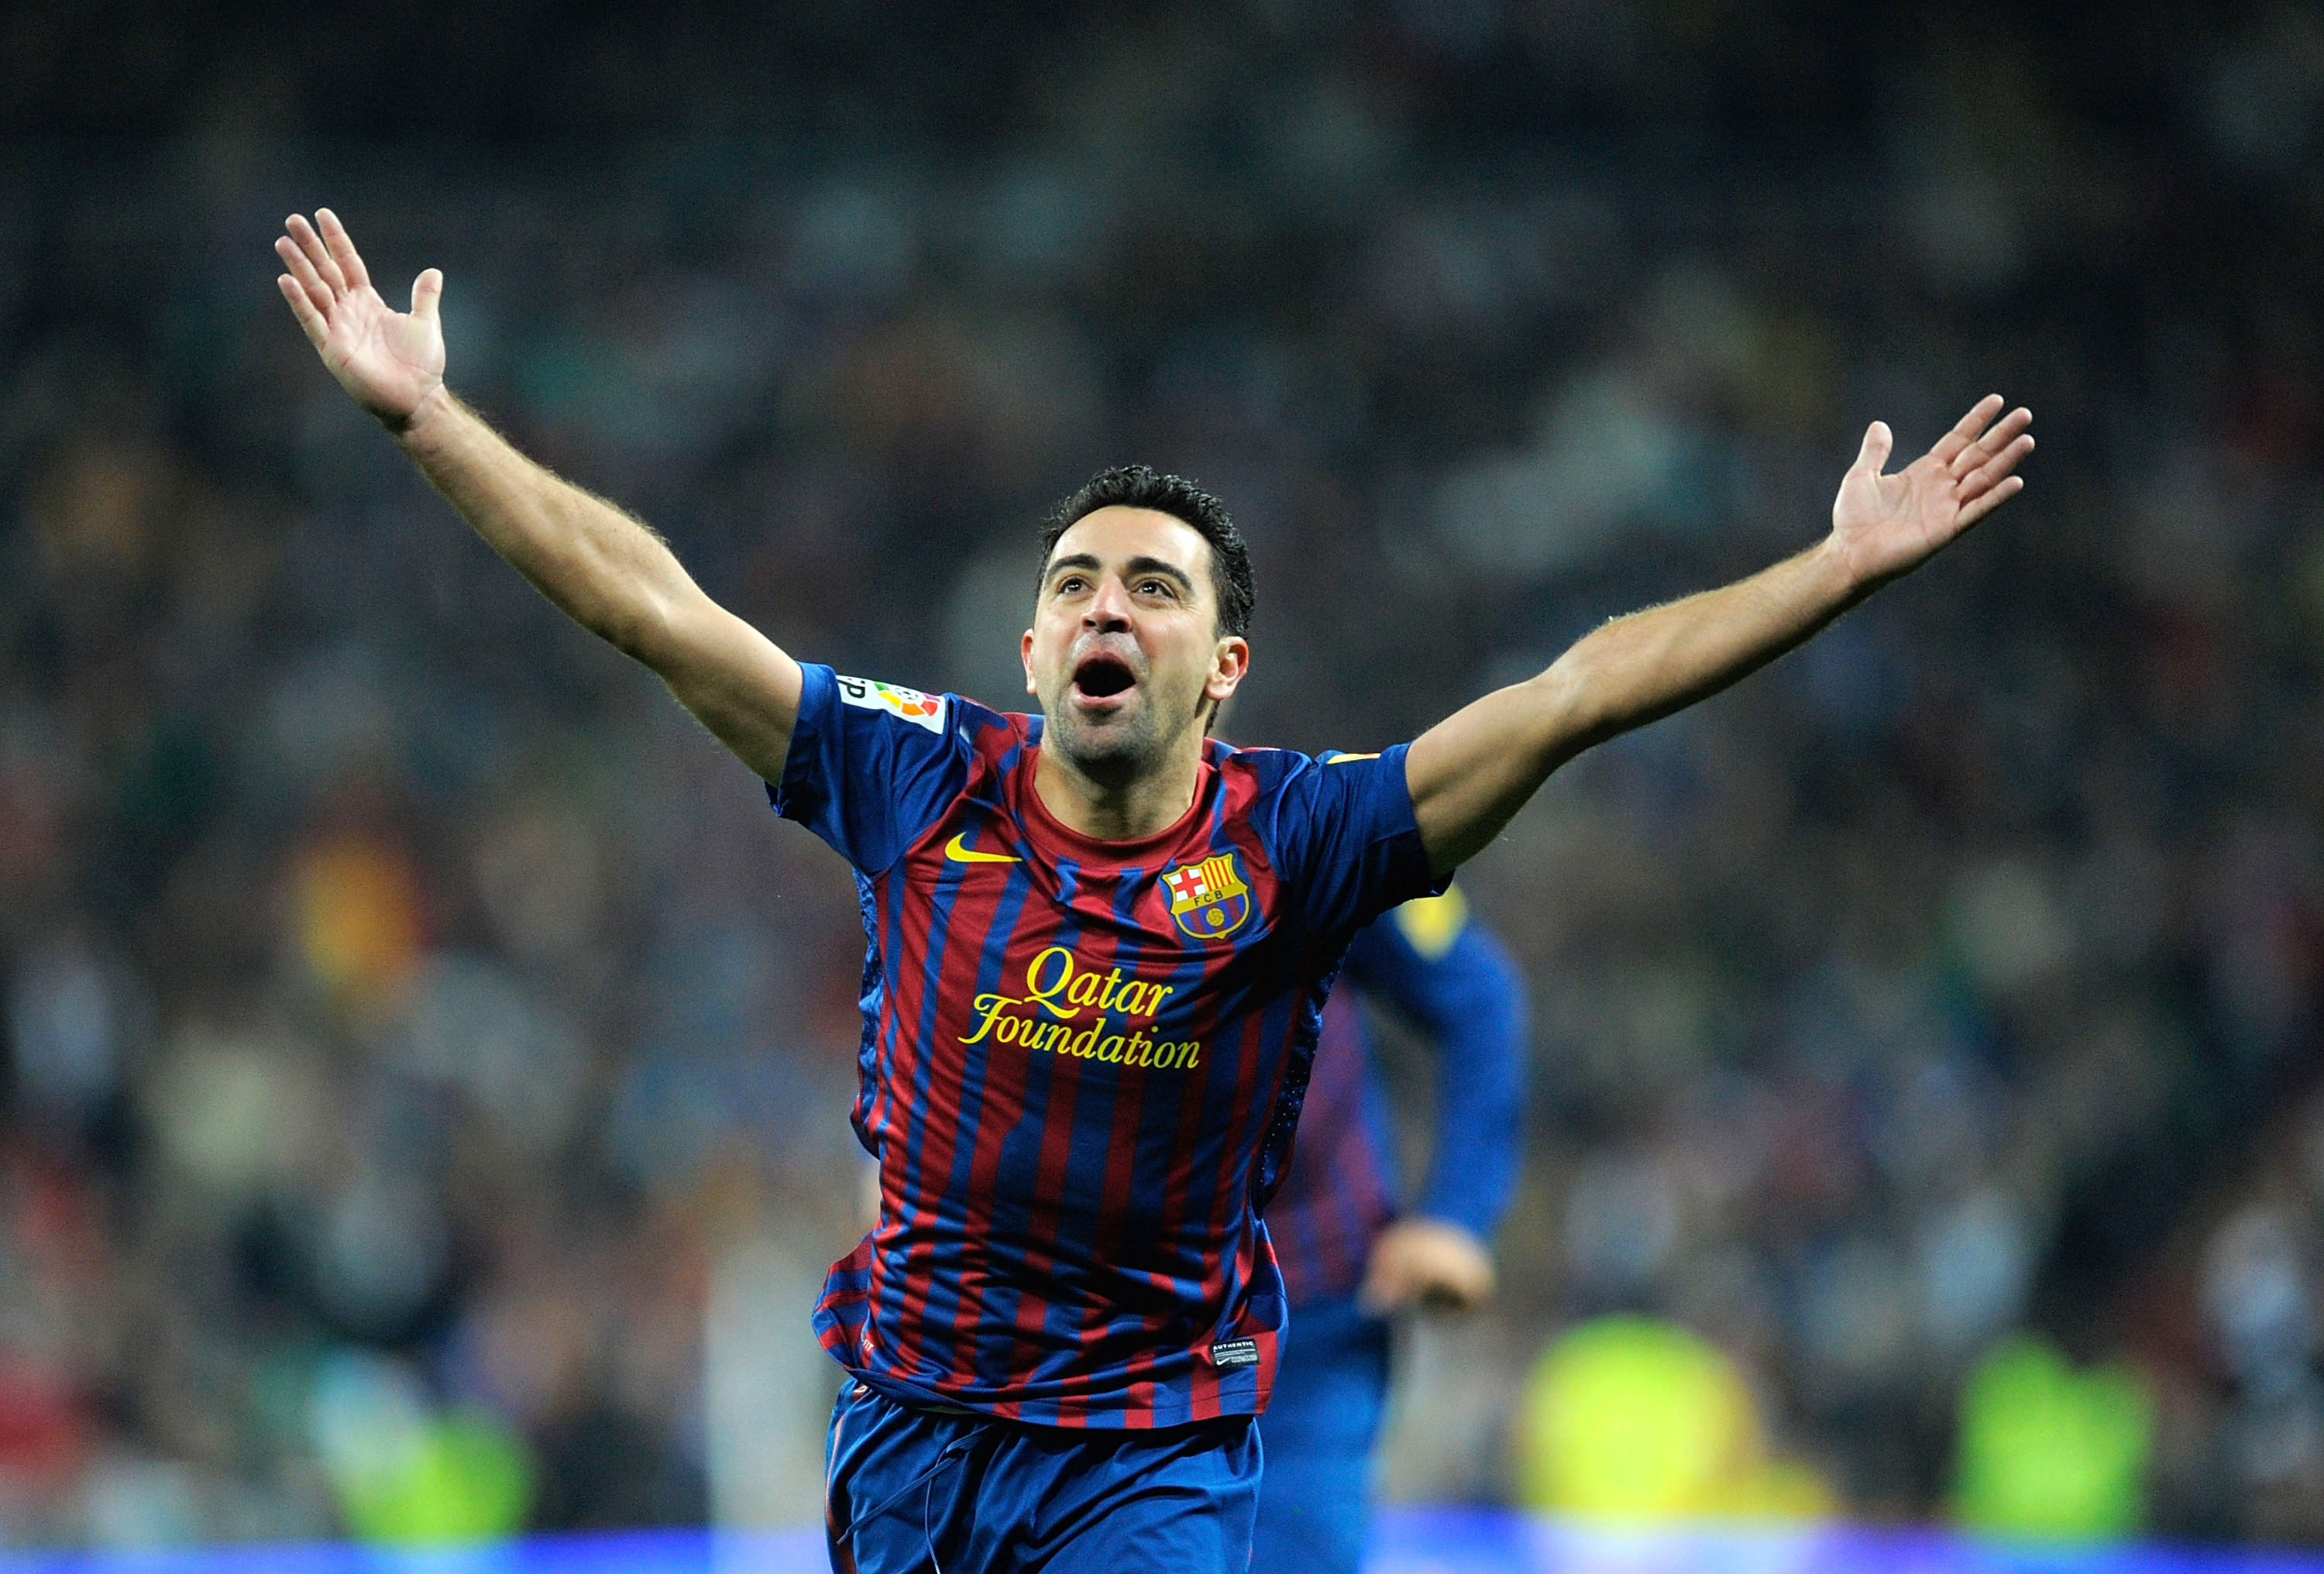 Xavi celebrates after scoring for Barcelona against Real Madrid in December 2011.